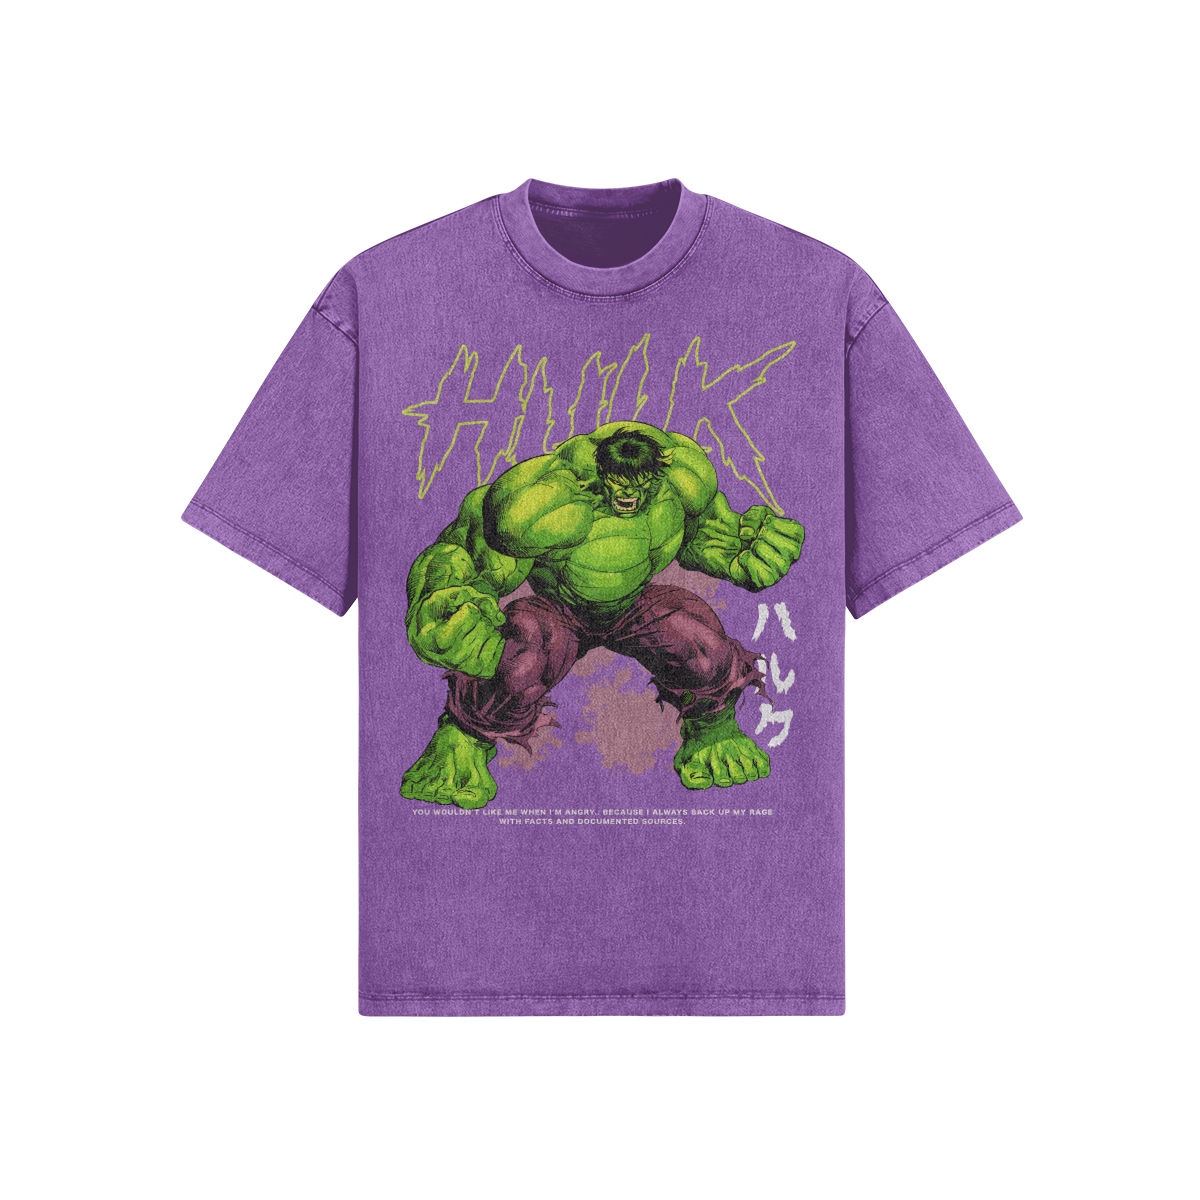 Hulk "SMASH" Vintage